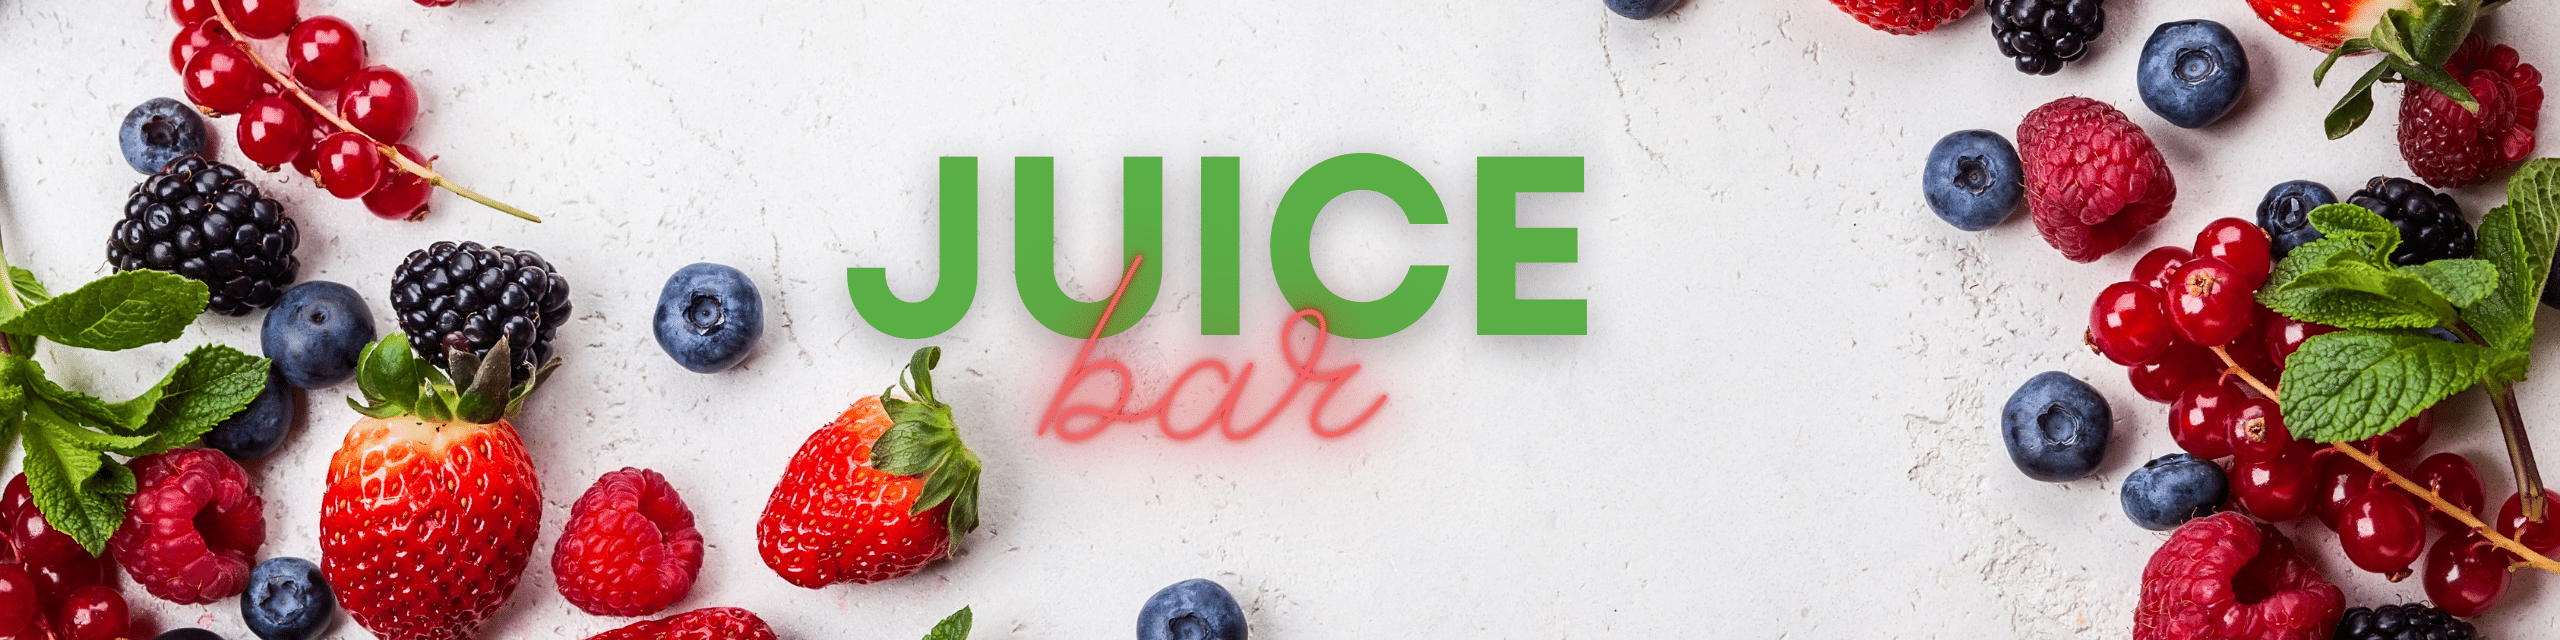 Green's juice bar